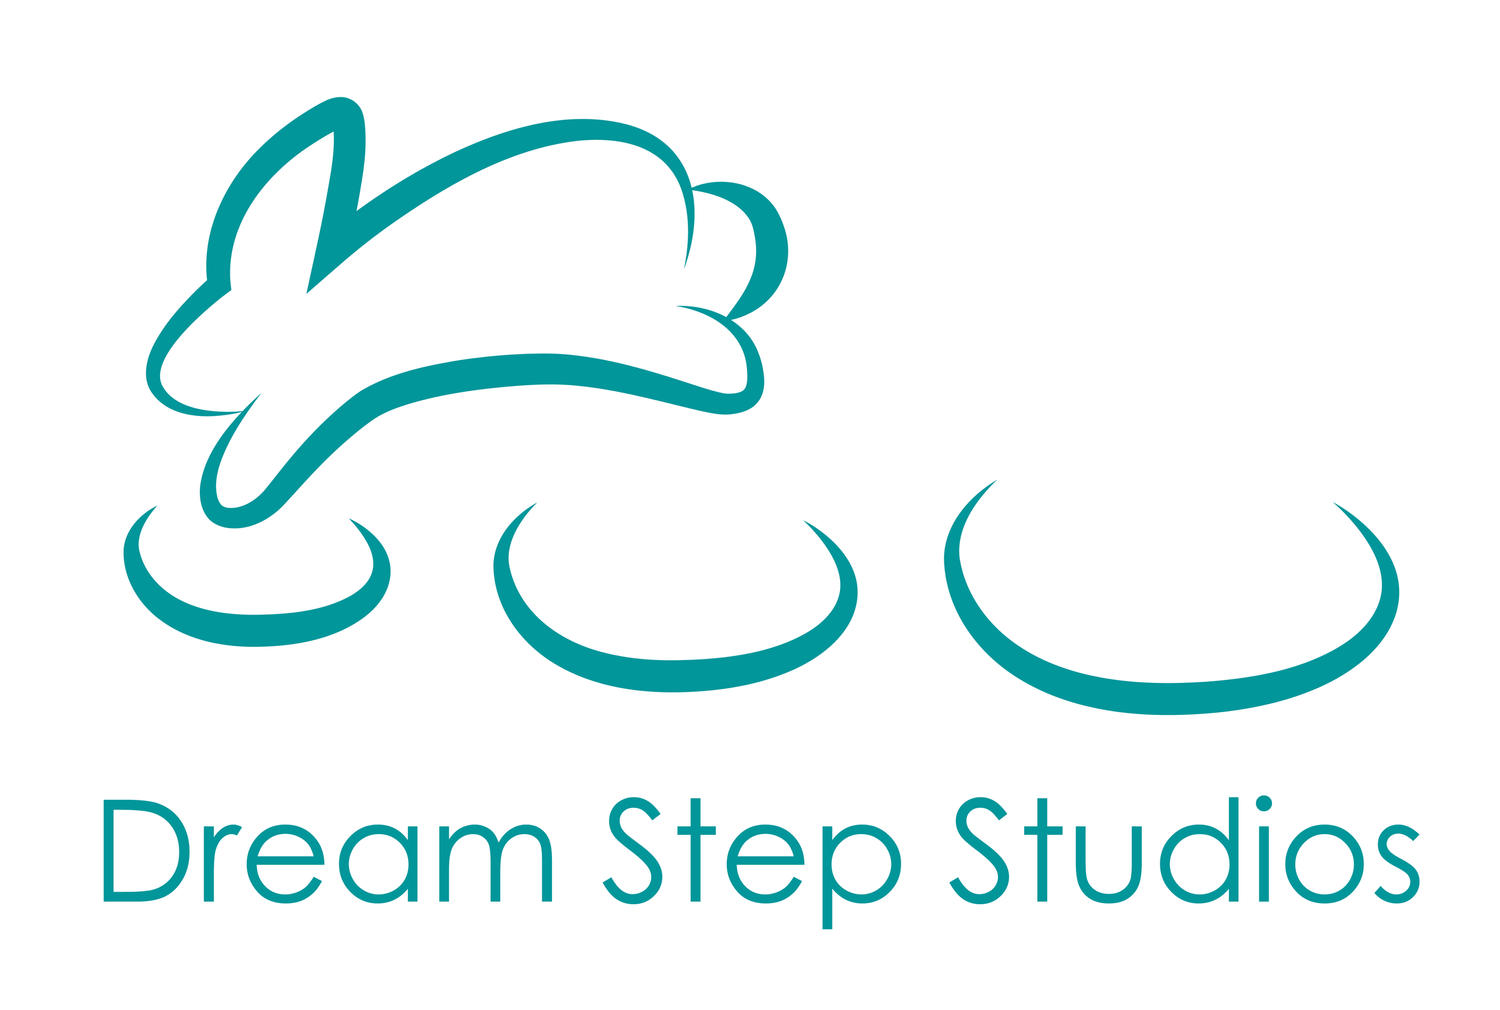 Dream Step Studios